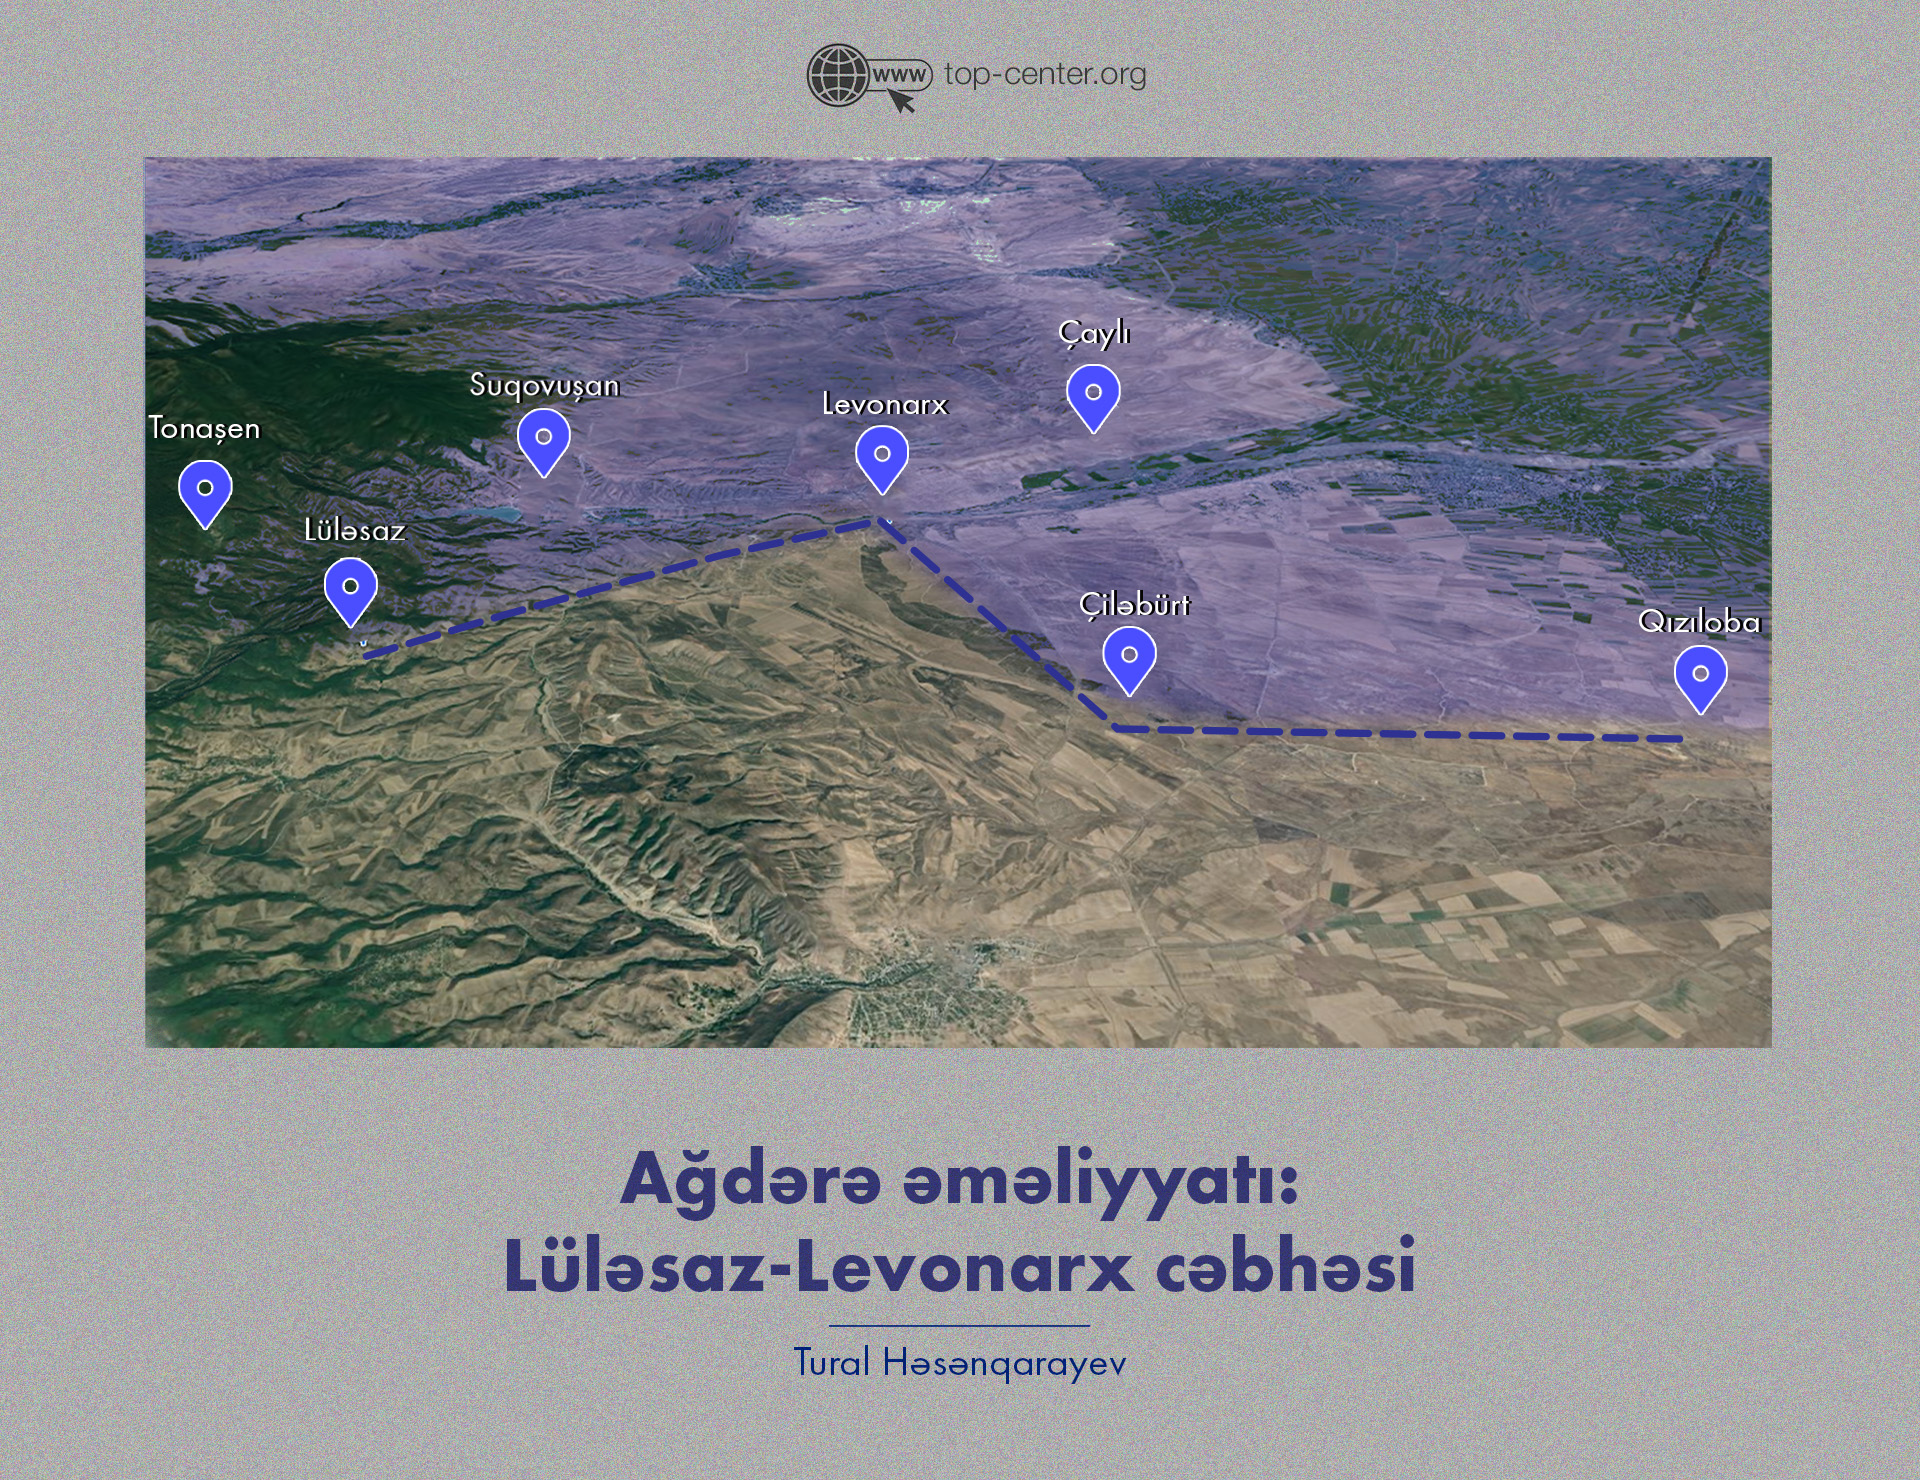 Hostilities in Aghdara (Lulesaz-Levonarkh front)